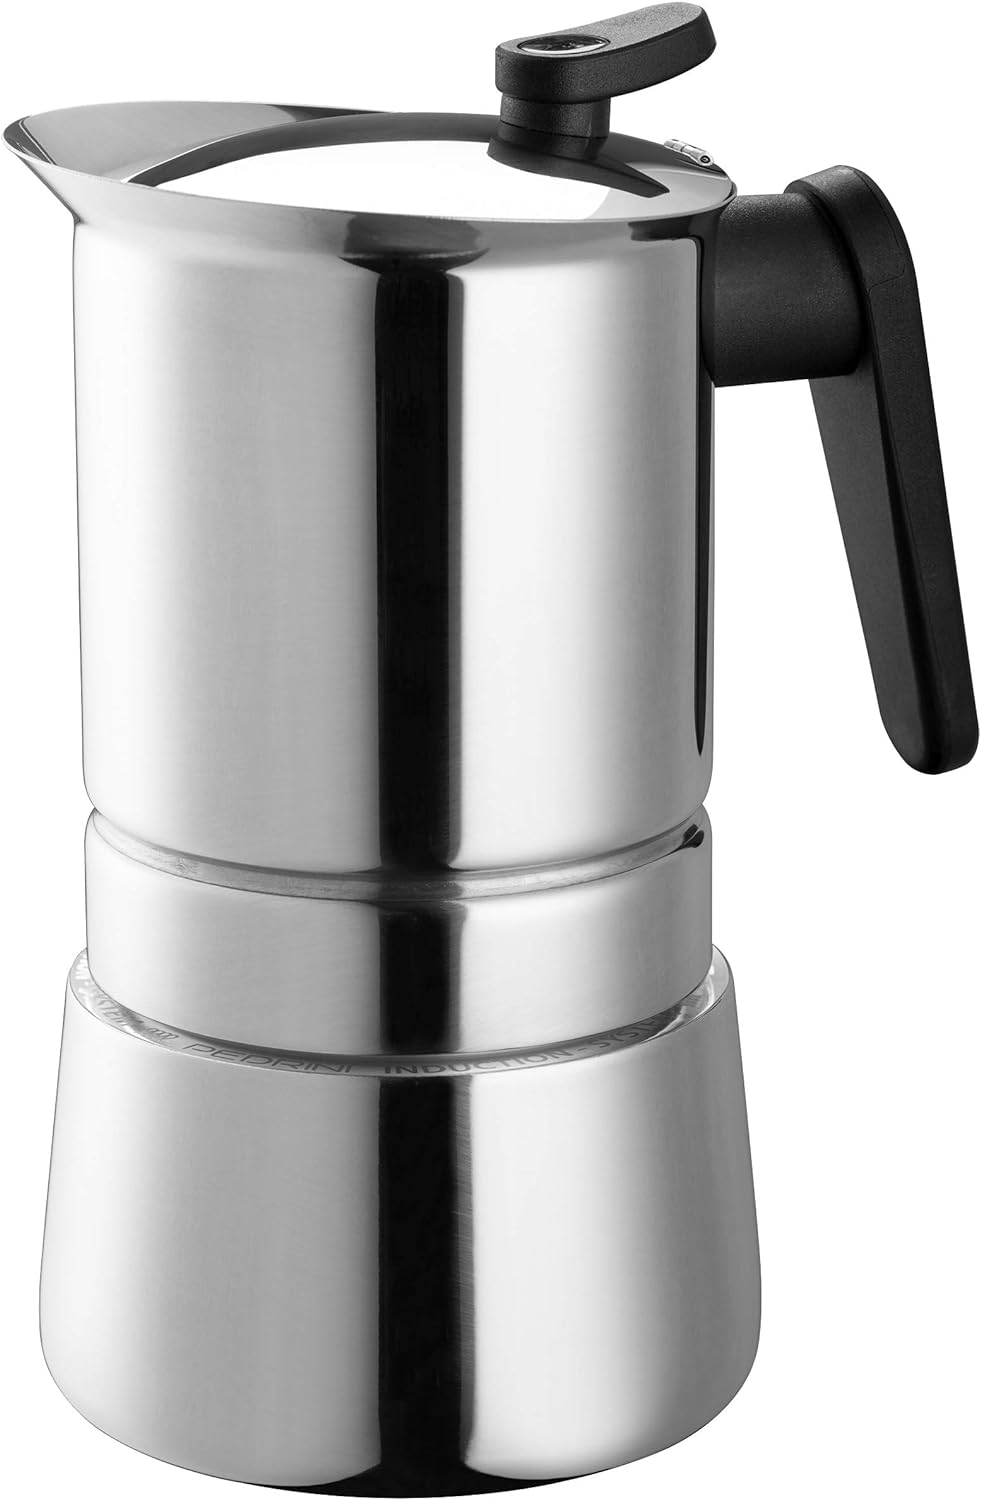 Pedrini Steelmoka, Patented Moka Espresso Machine for Hobs Including Induction, Capacity 10 Cups, Silver Color, Steel Coffee Machine, 16.7 x 11.9 x 22.4 cm